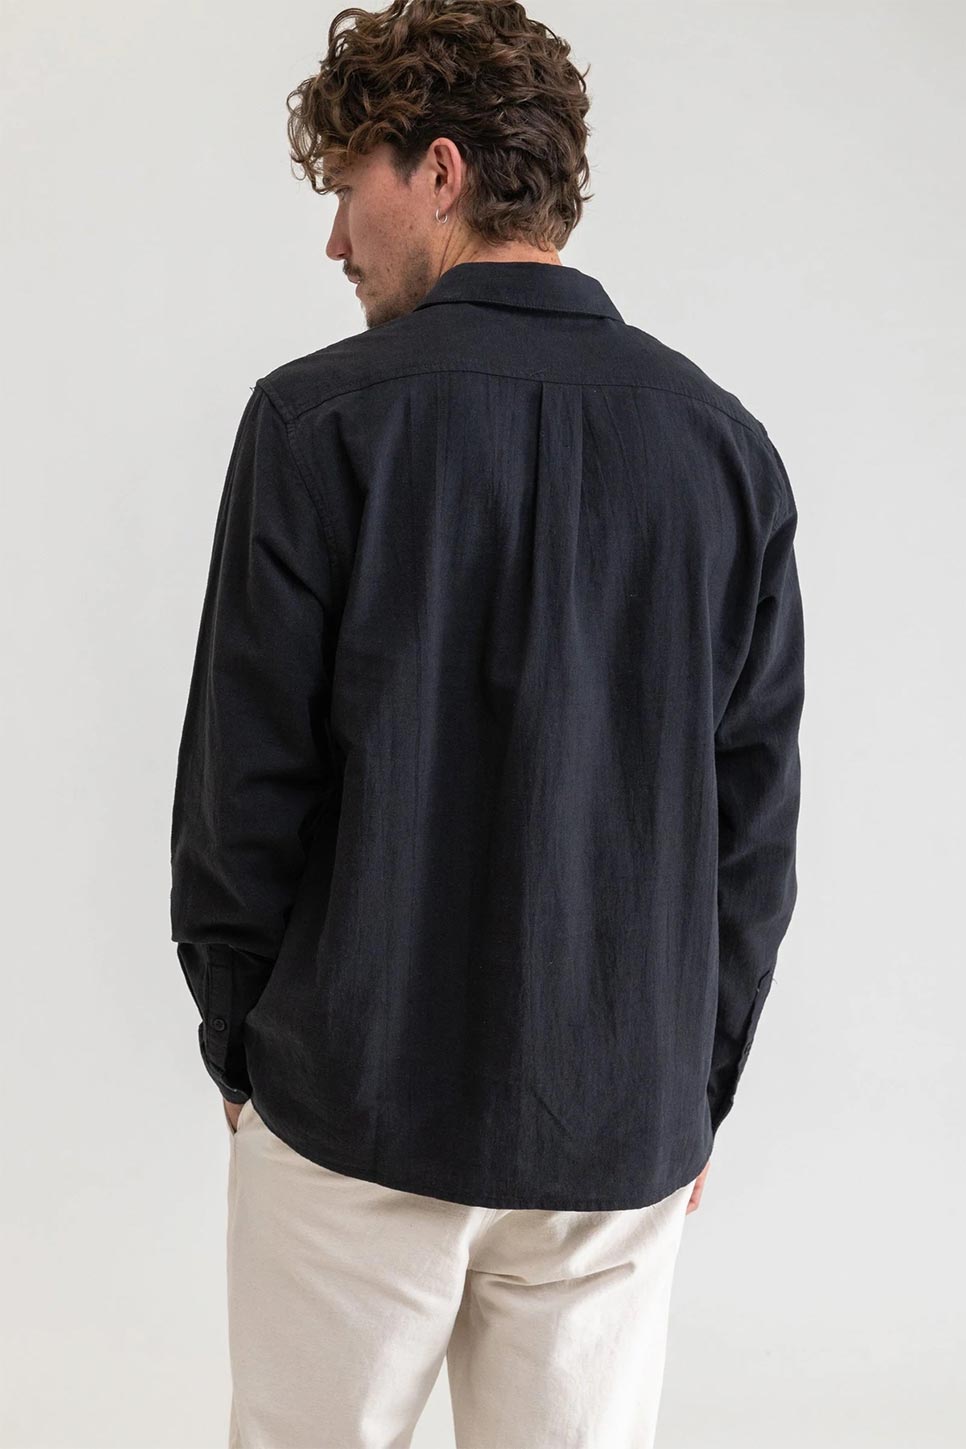 Rhythm - Classic Linen LS Shirt - Vintage Black - Back